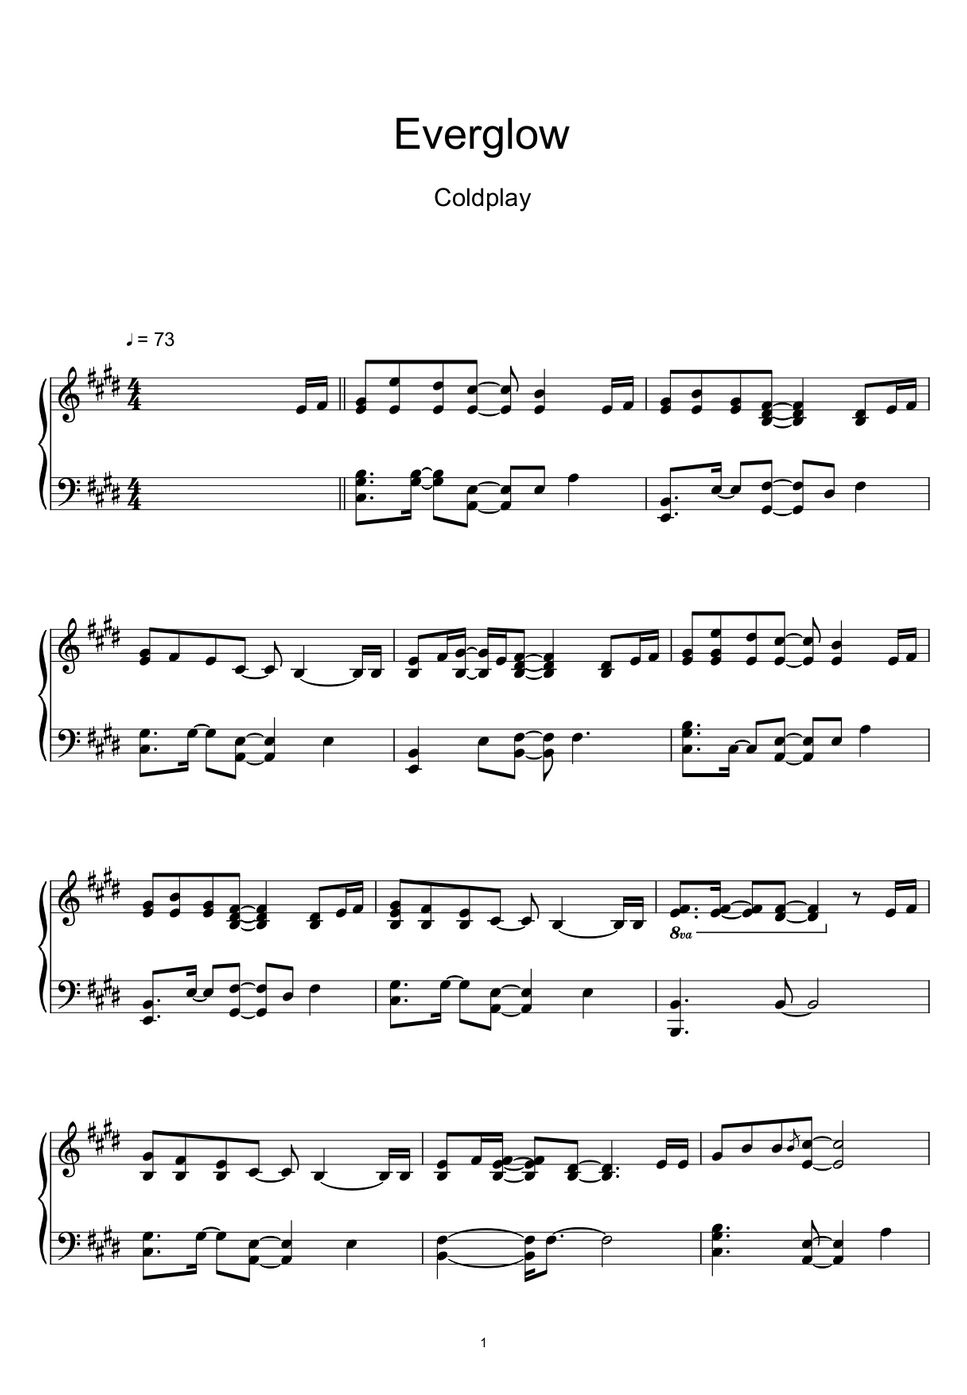 Coldplay - Everglow (Sheet Music, MIDI,) by sayu